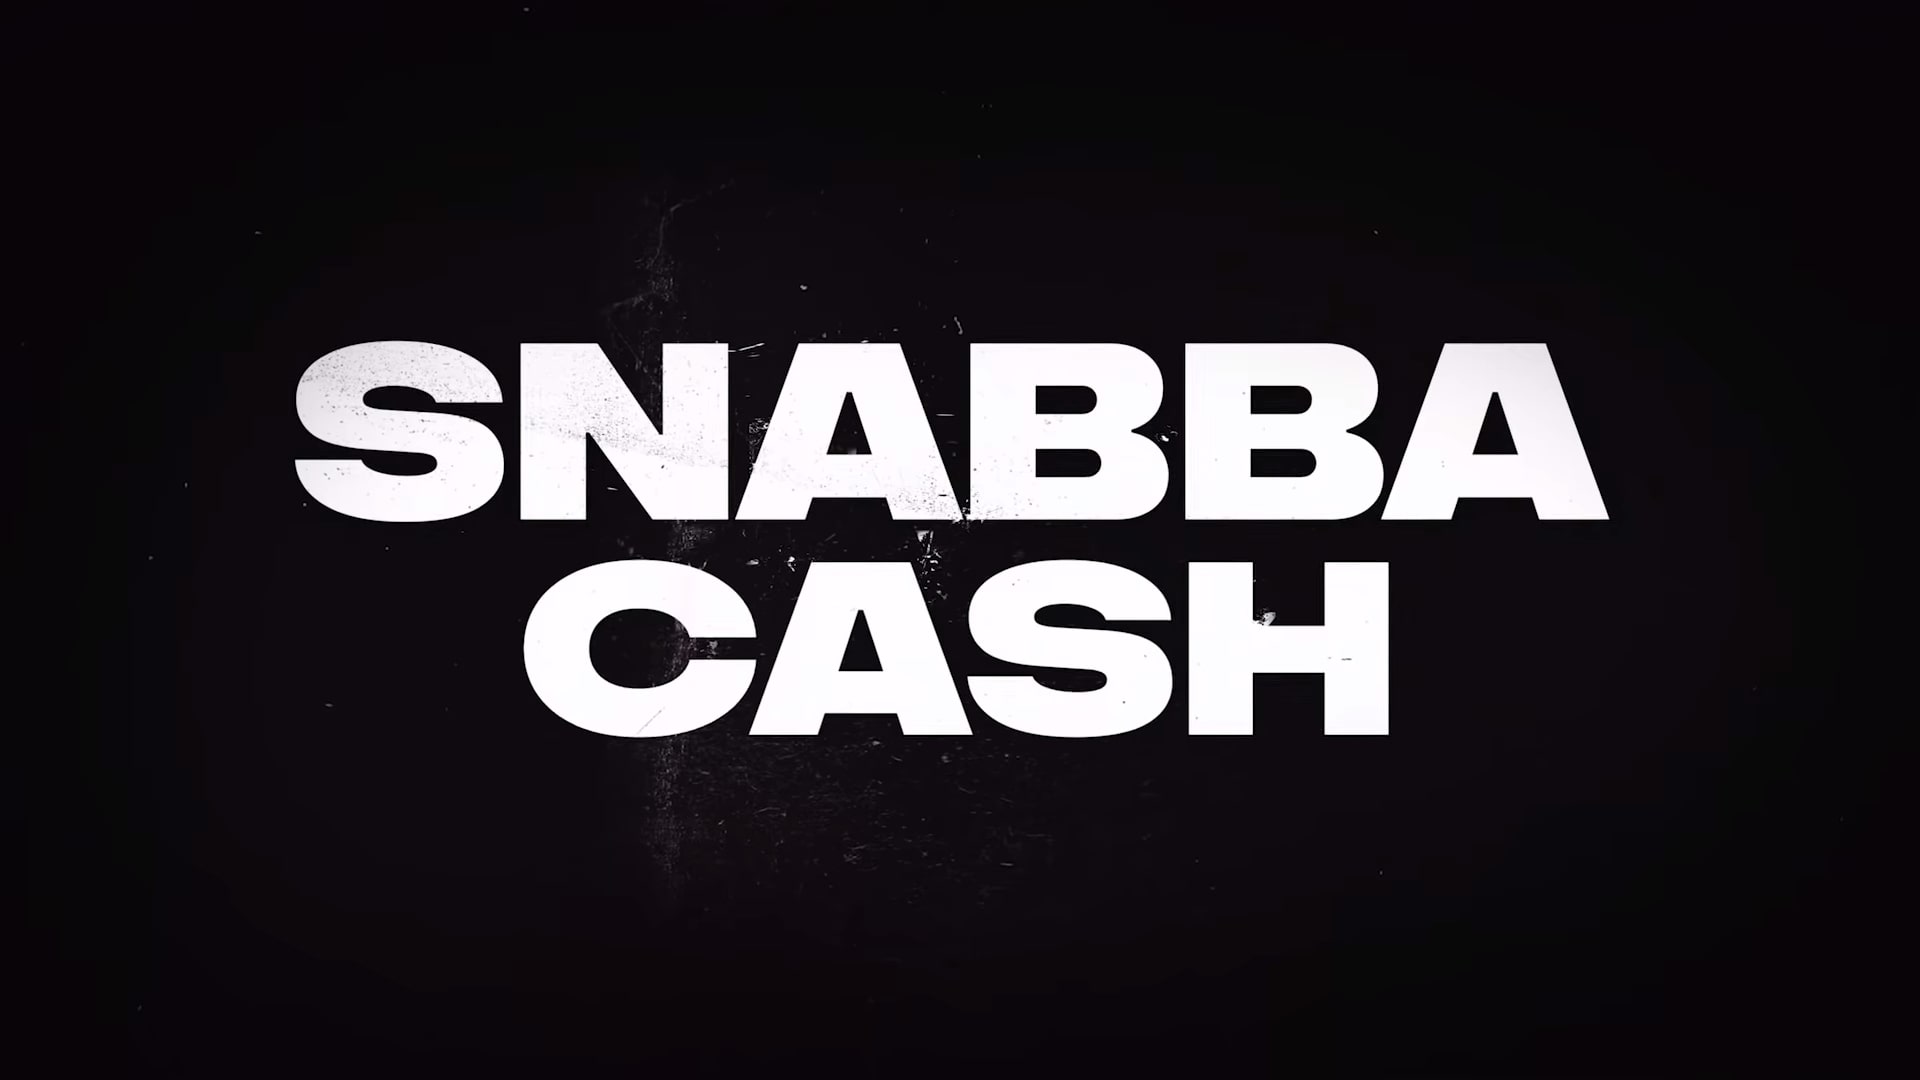 Netflix Snabba Cash Trailer, Netflix Crime Drama Series, Coming to Netflix in April 2021